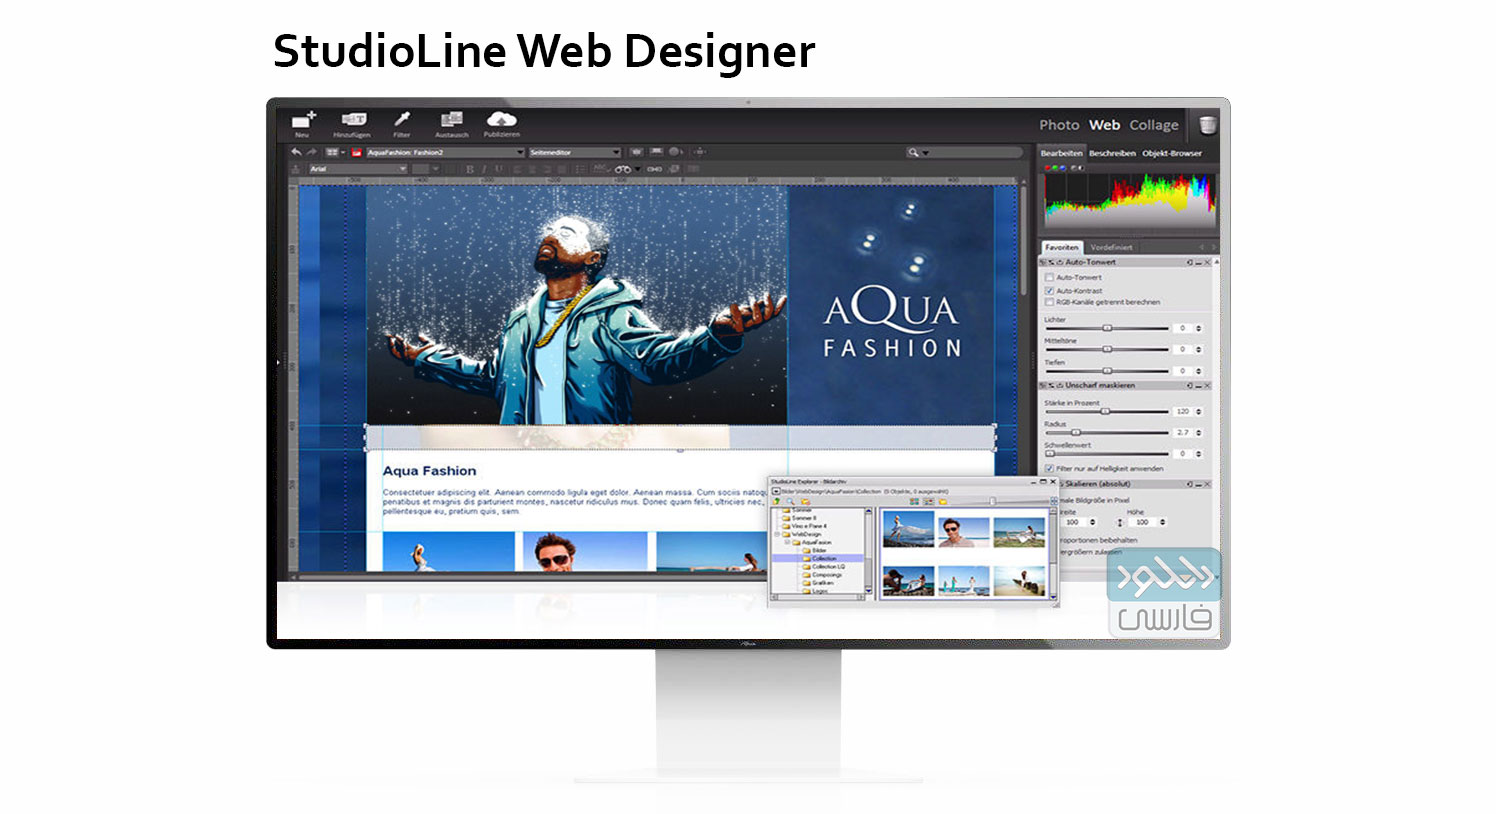 StudioLine Web Designer Pro 5.0.6 instal the new for ios